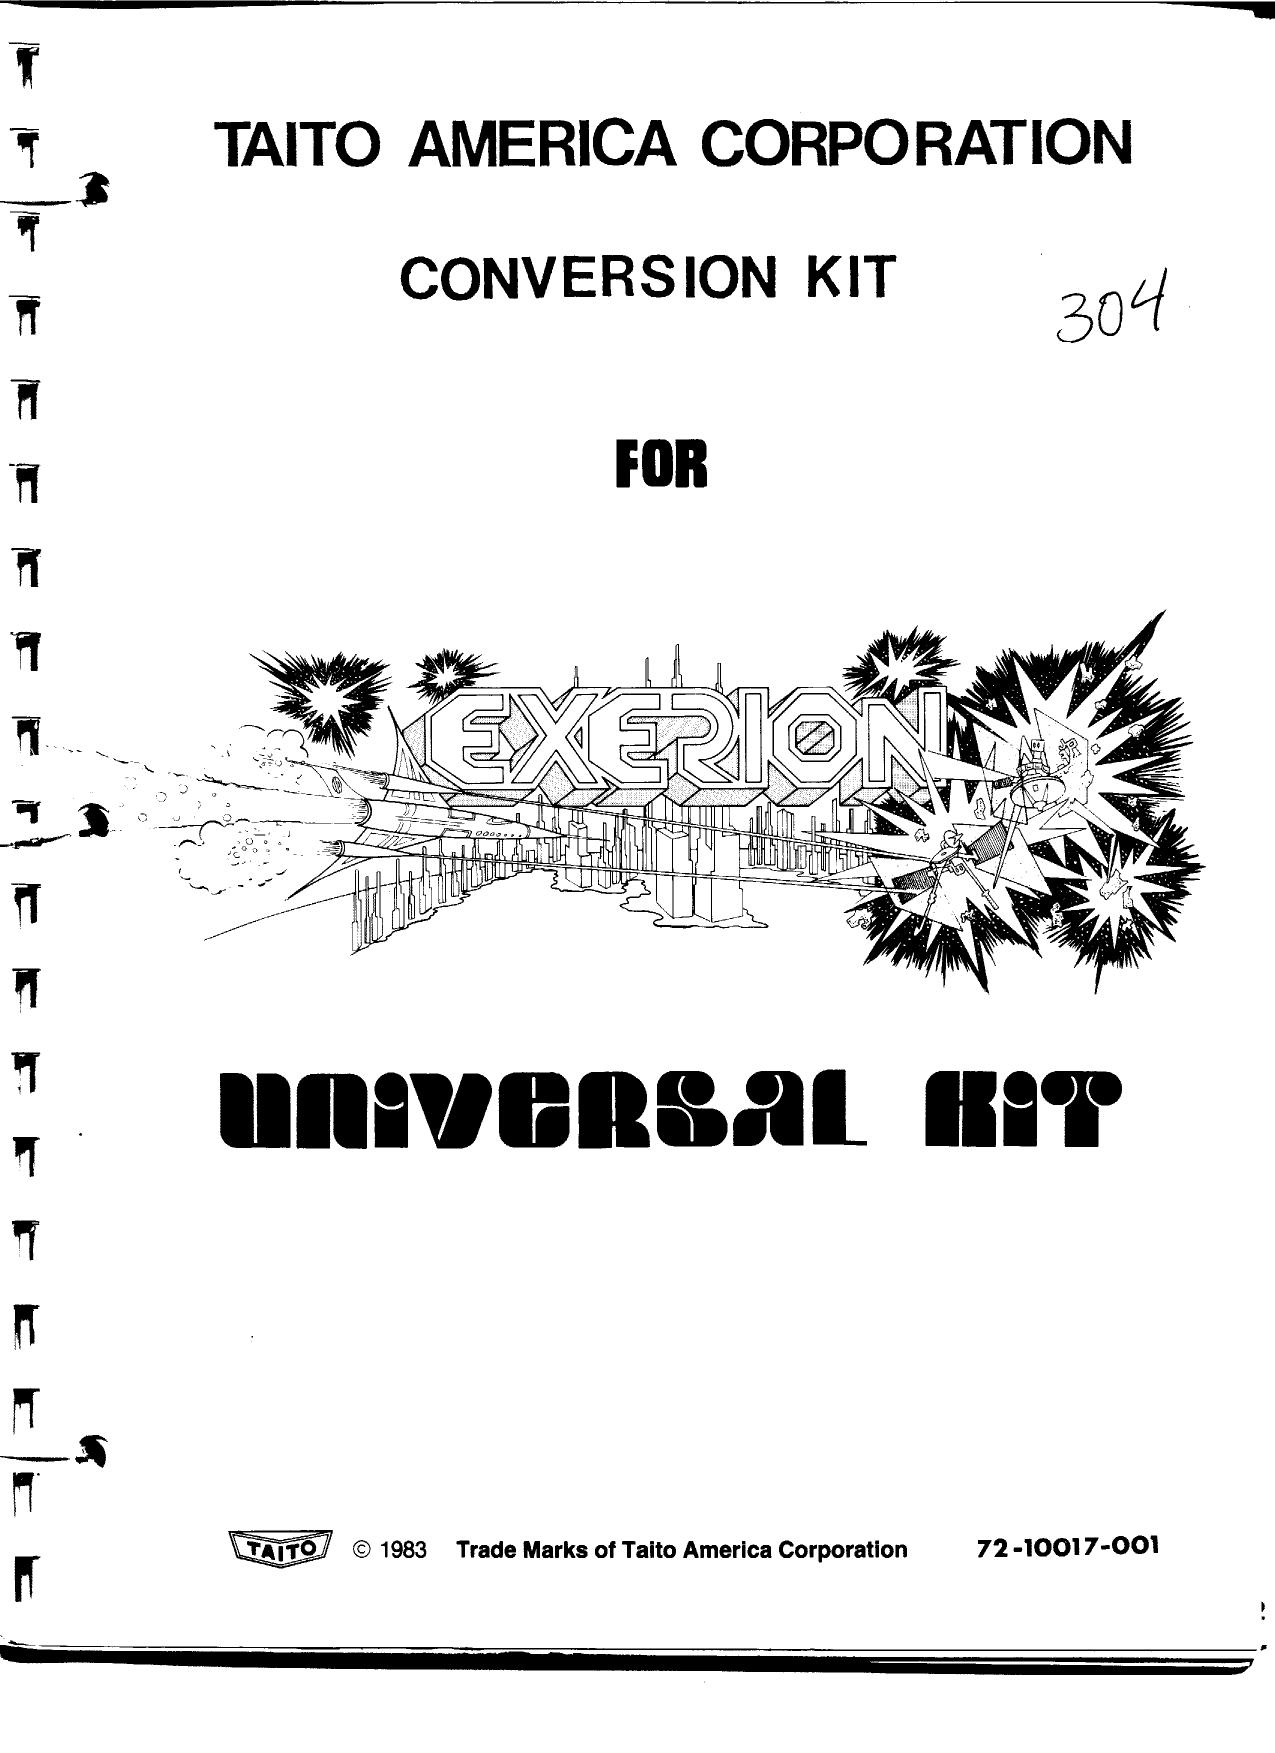 Exerion (Universal Conv. Kit) (U)